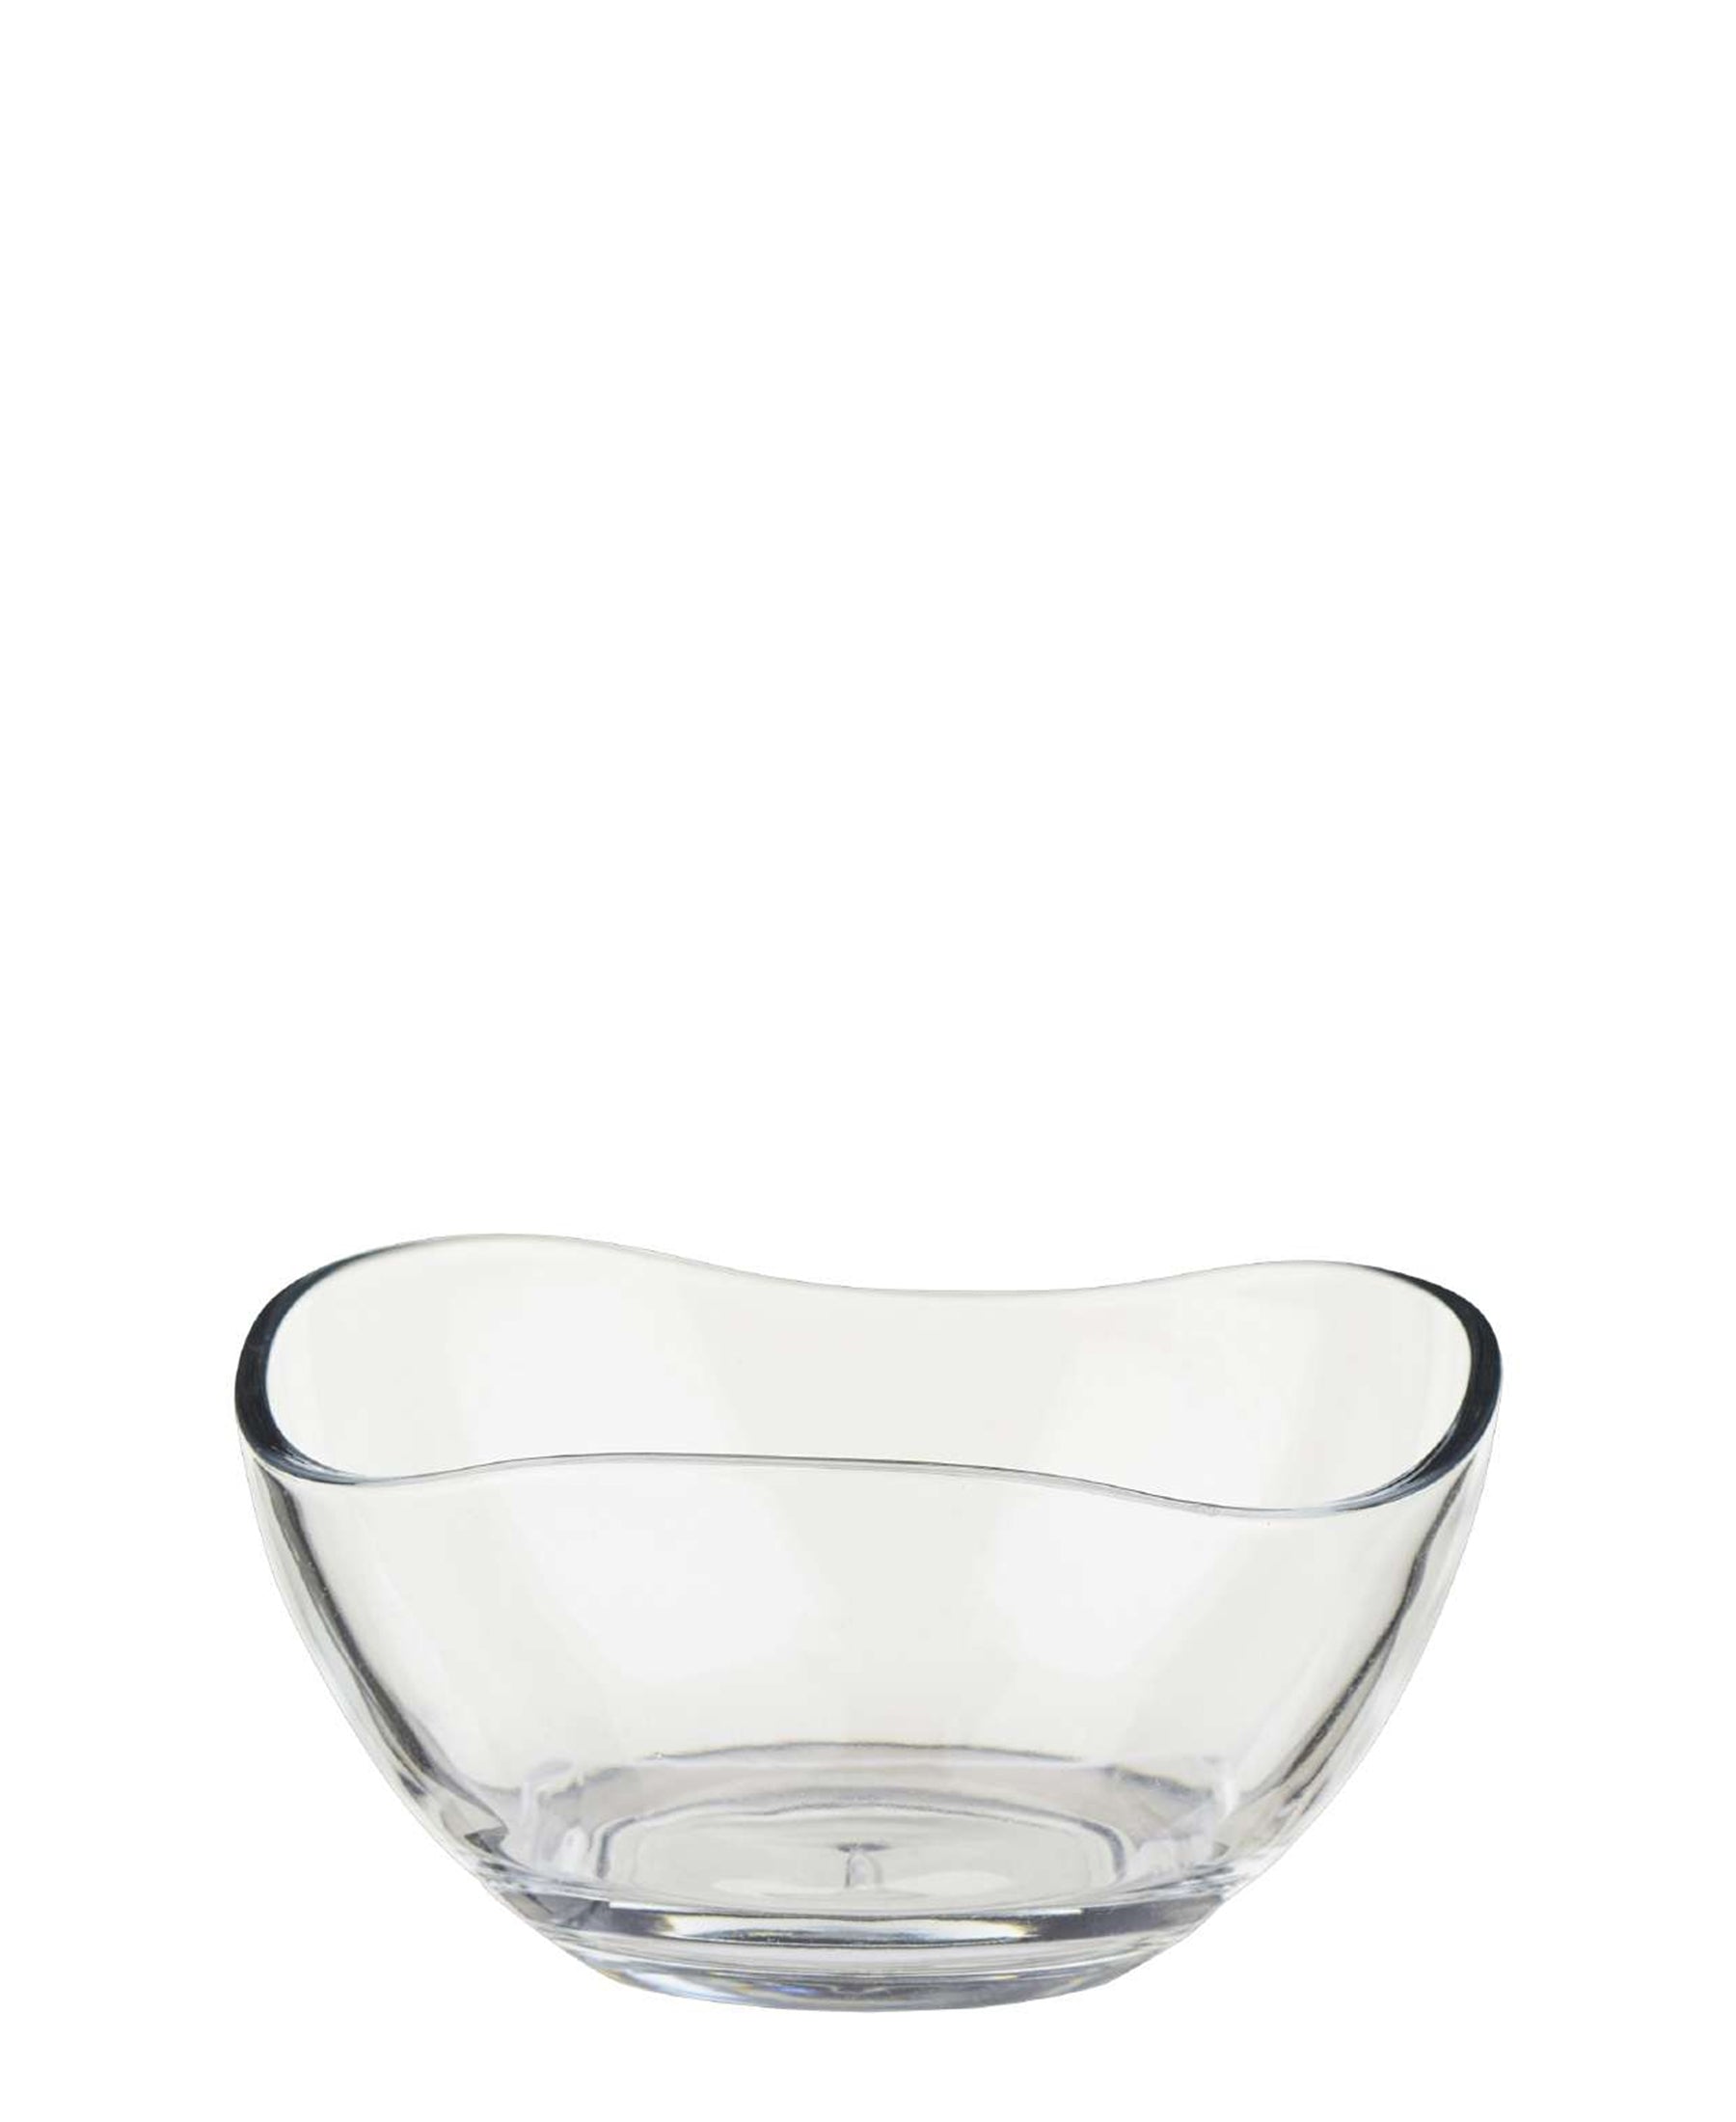 LAV Vira Glass Bowl - Clear